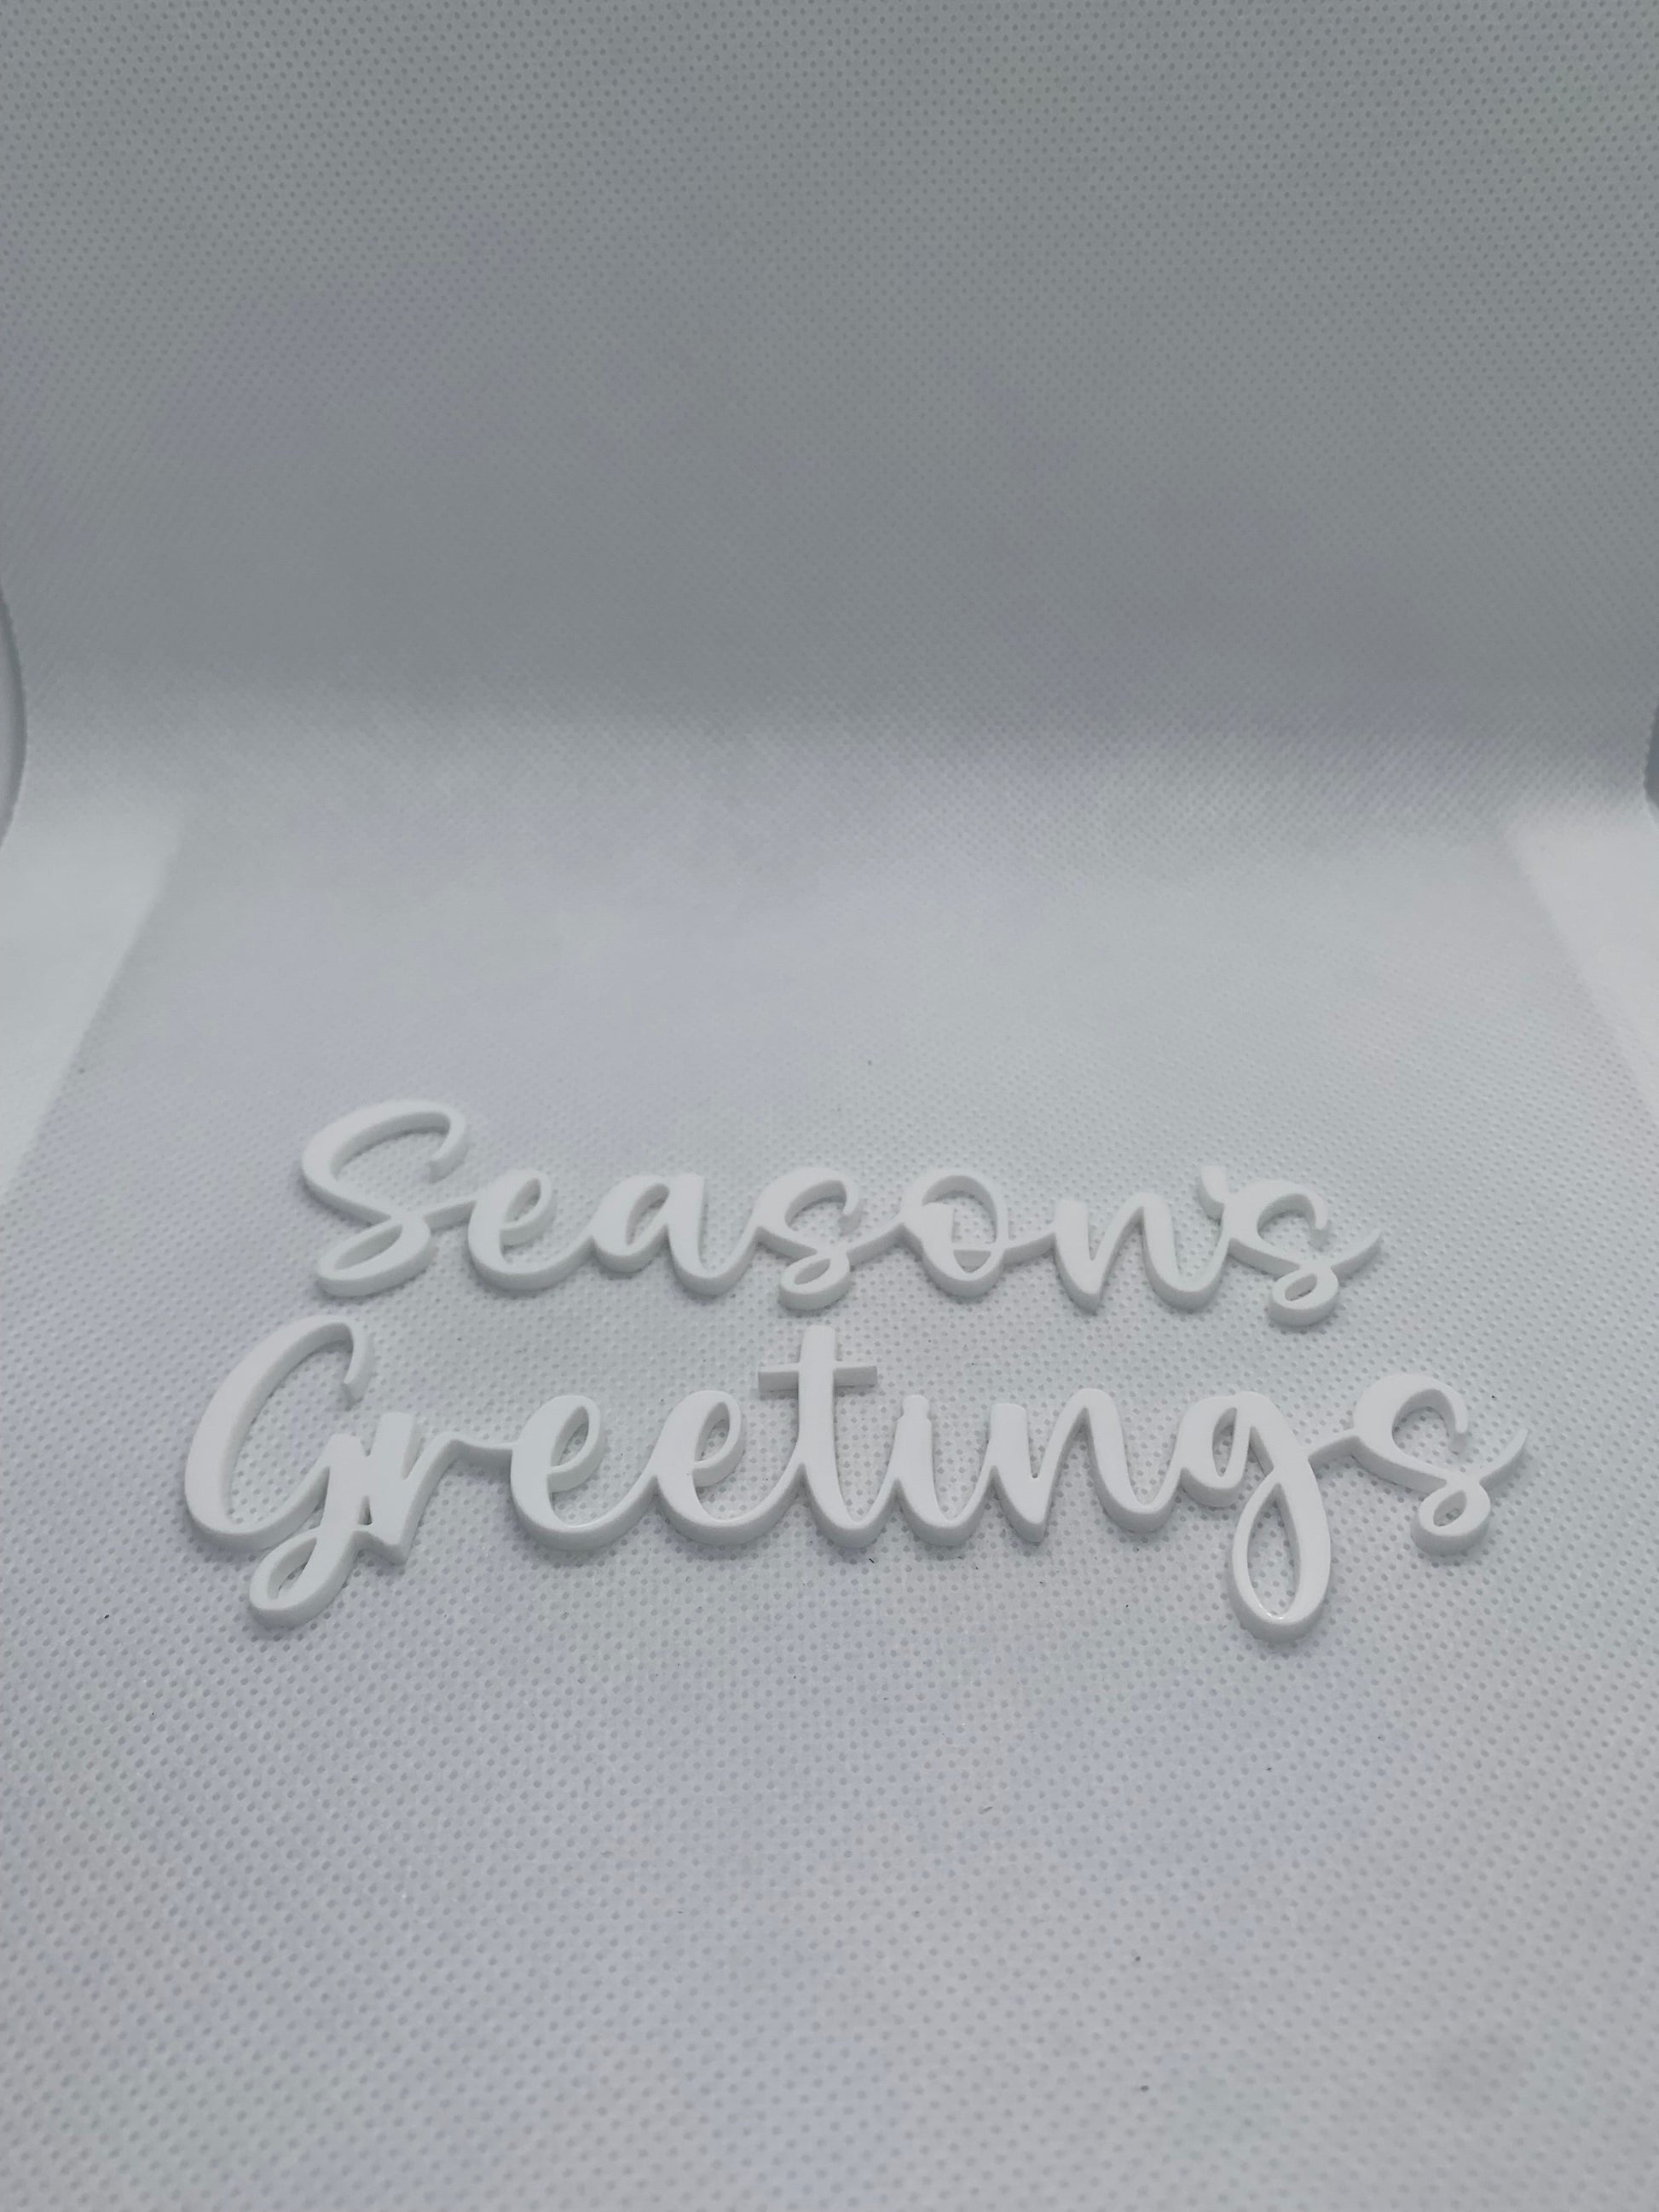 Season's Greetings - Creative Designs By Kari